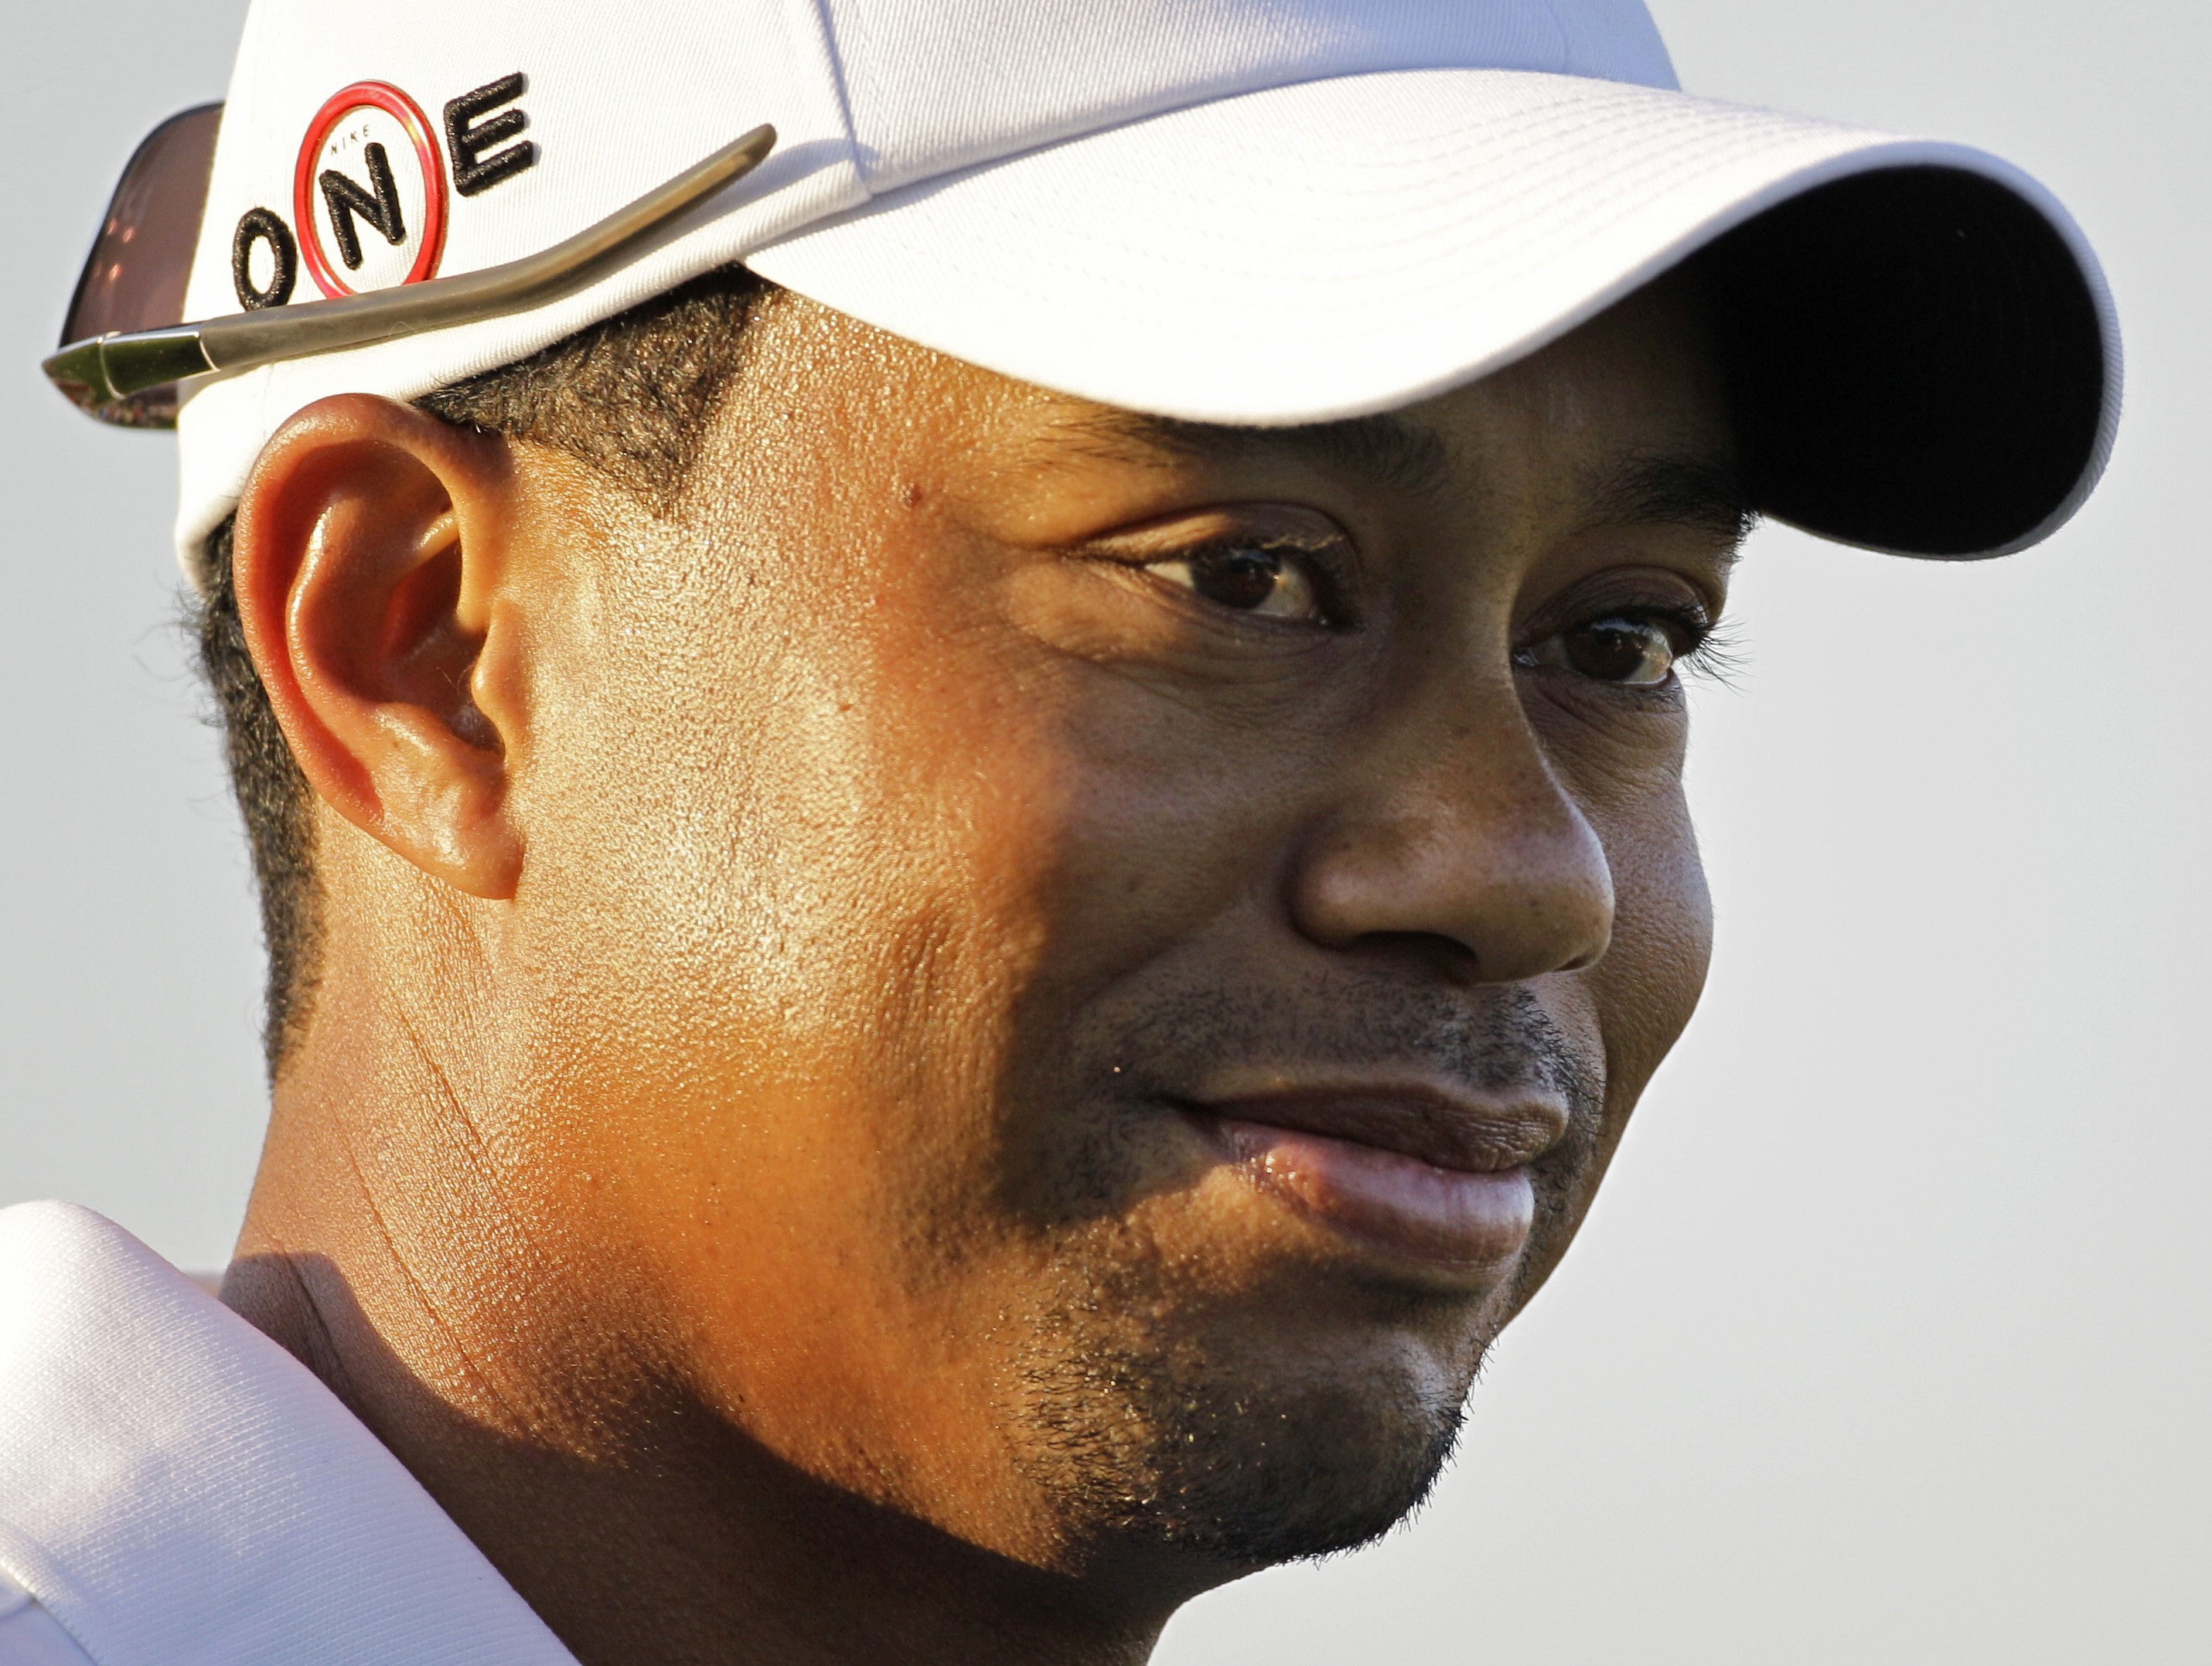 Tiger Woods, Elin Nordegren, Otrohet, Polisen, Golf, Presskonferens